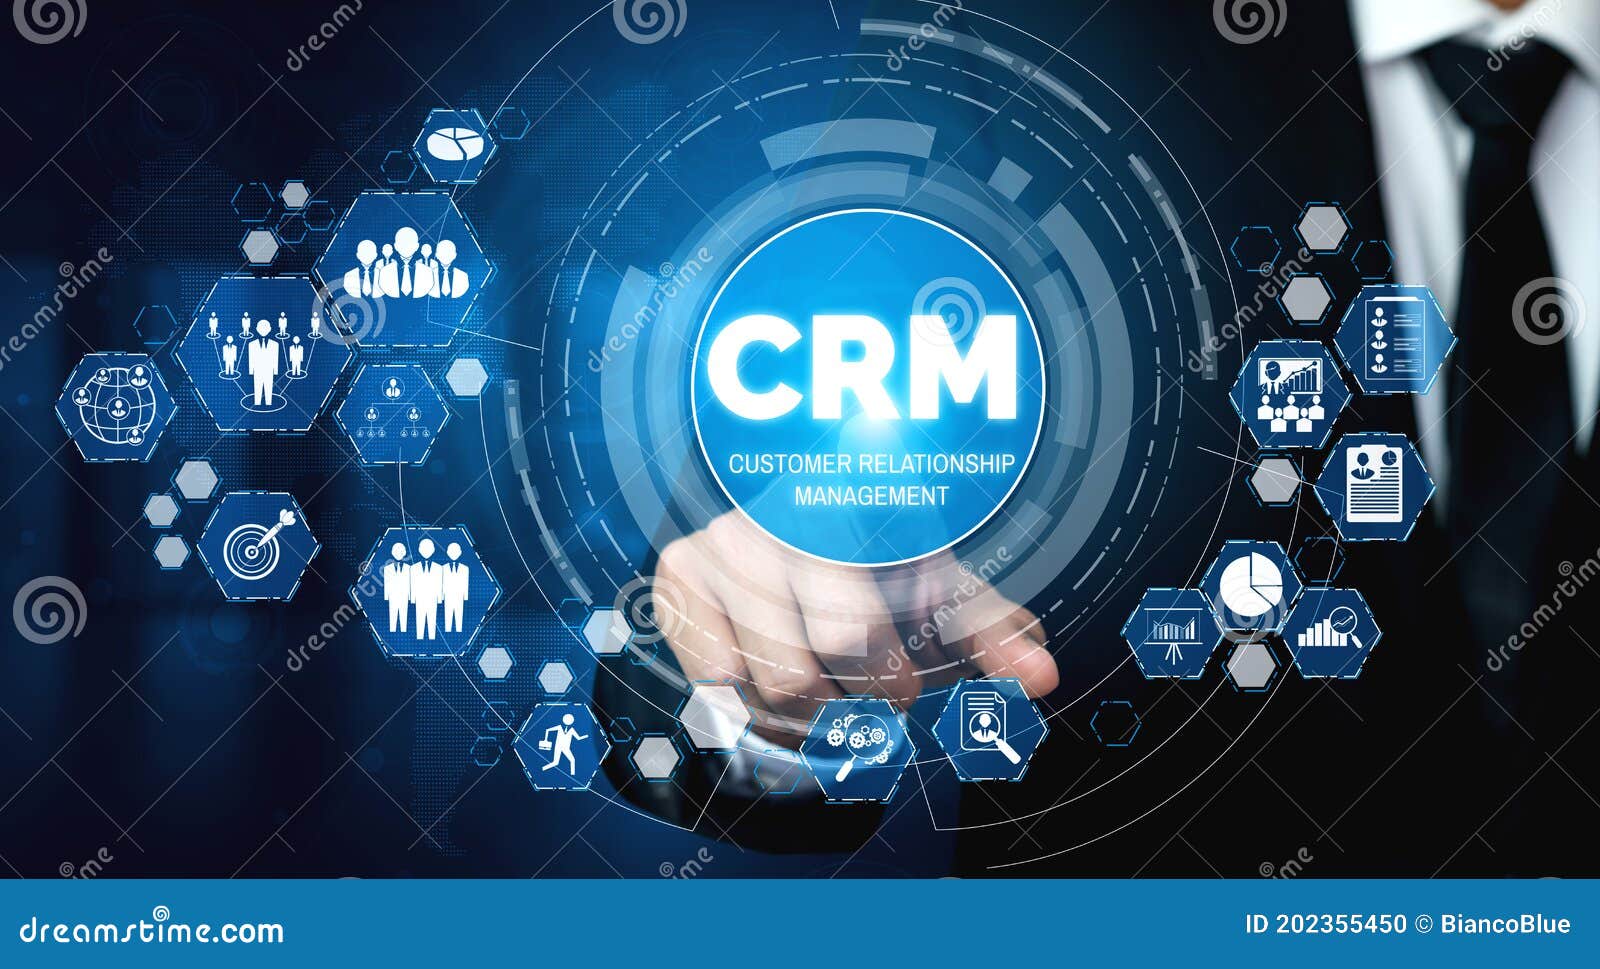 CRM Relationship Management for Business Sales Marketing System Concept Stock Illustration - Illustration of management, button: 202355450